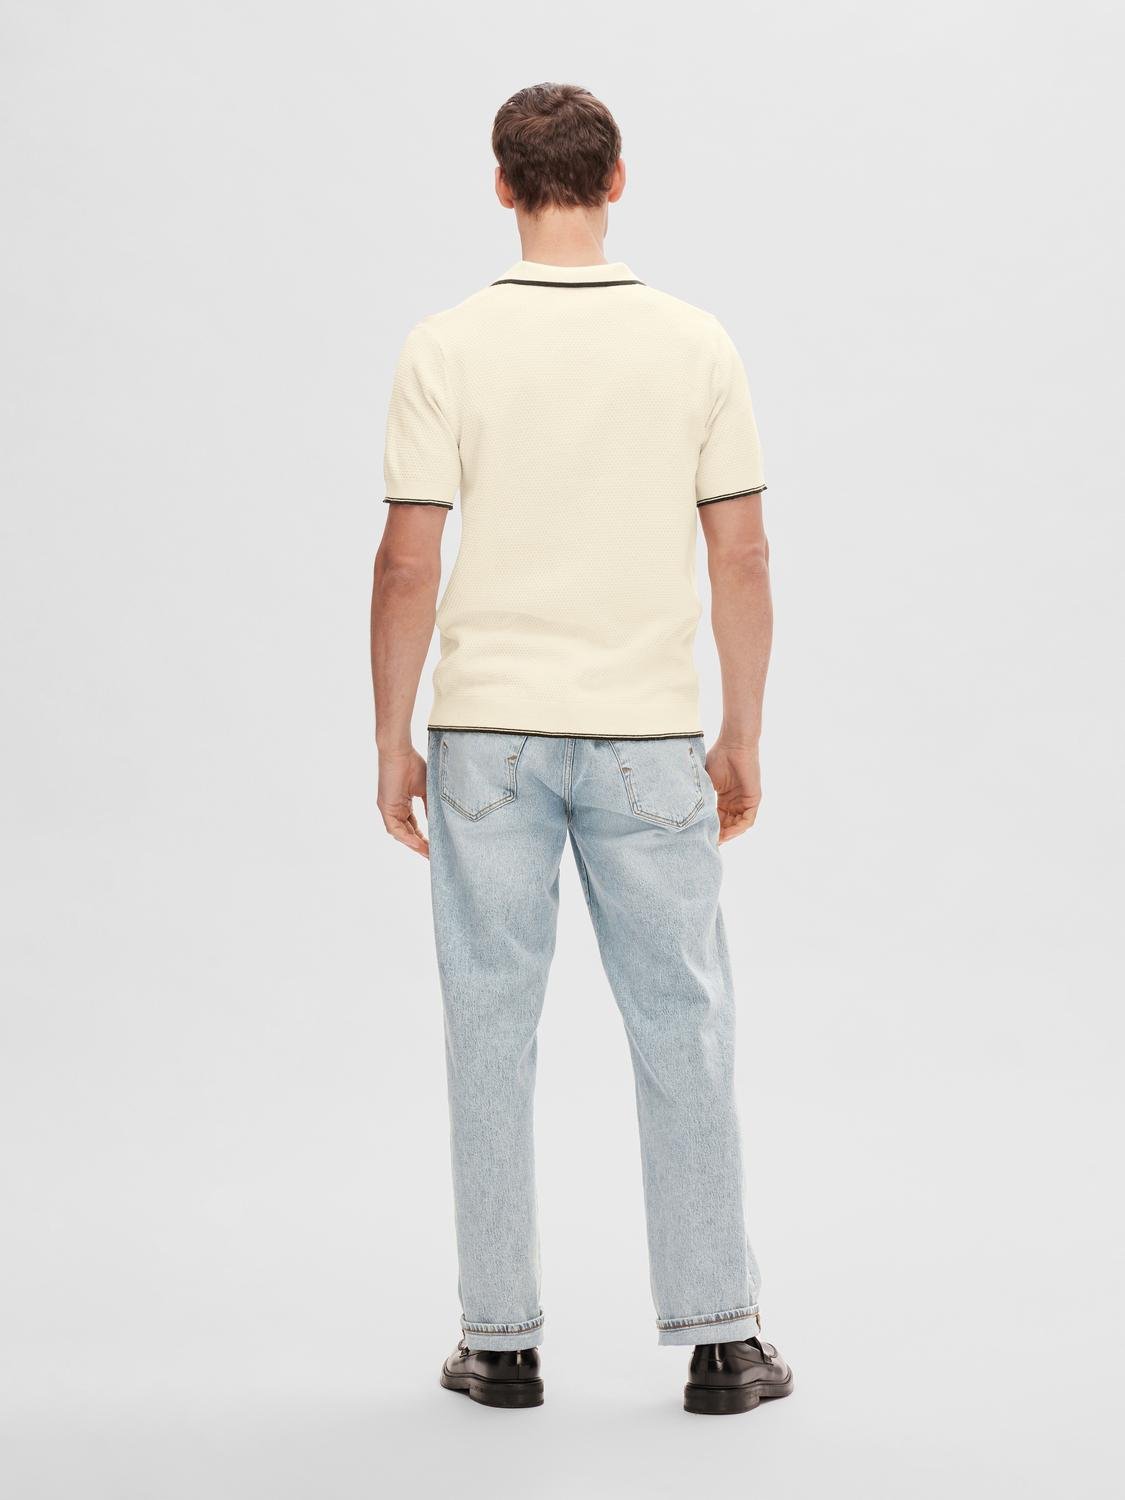 Arlo Polo T-skjorte - Beige/ Egret